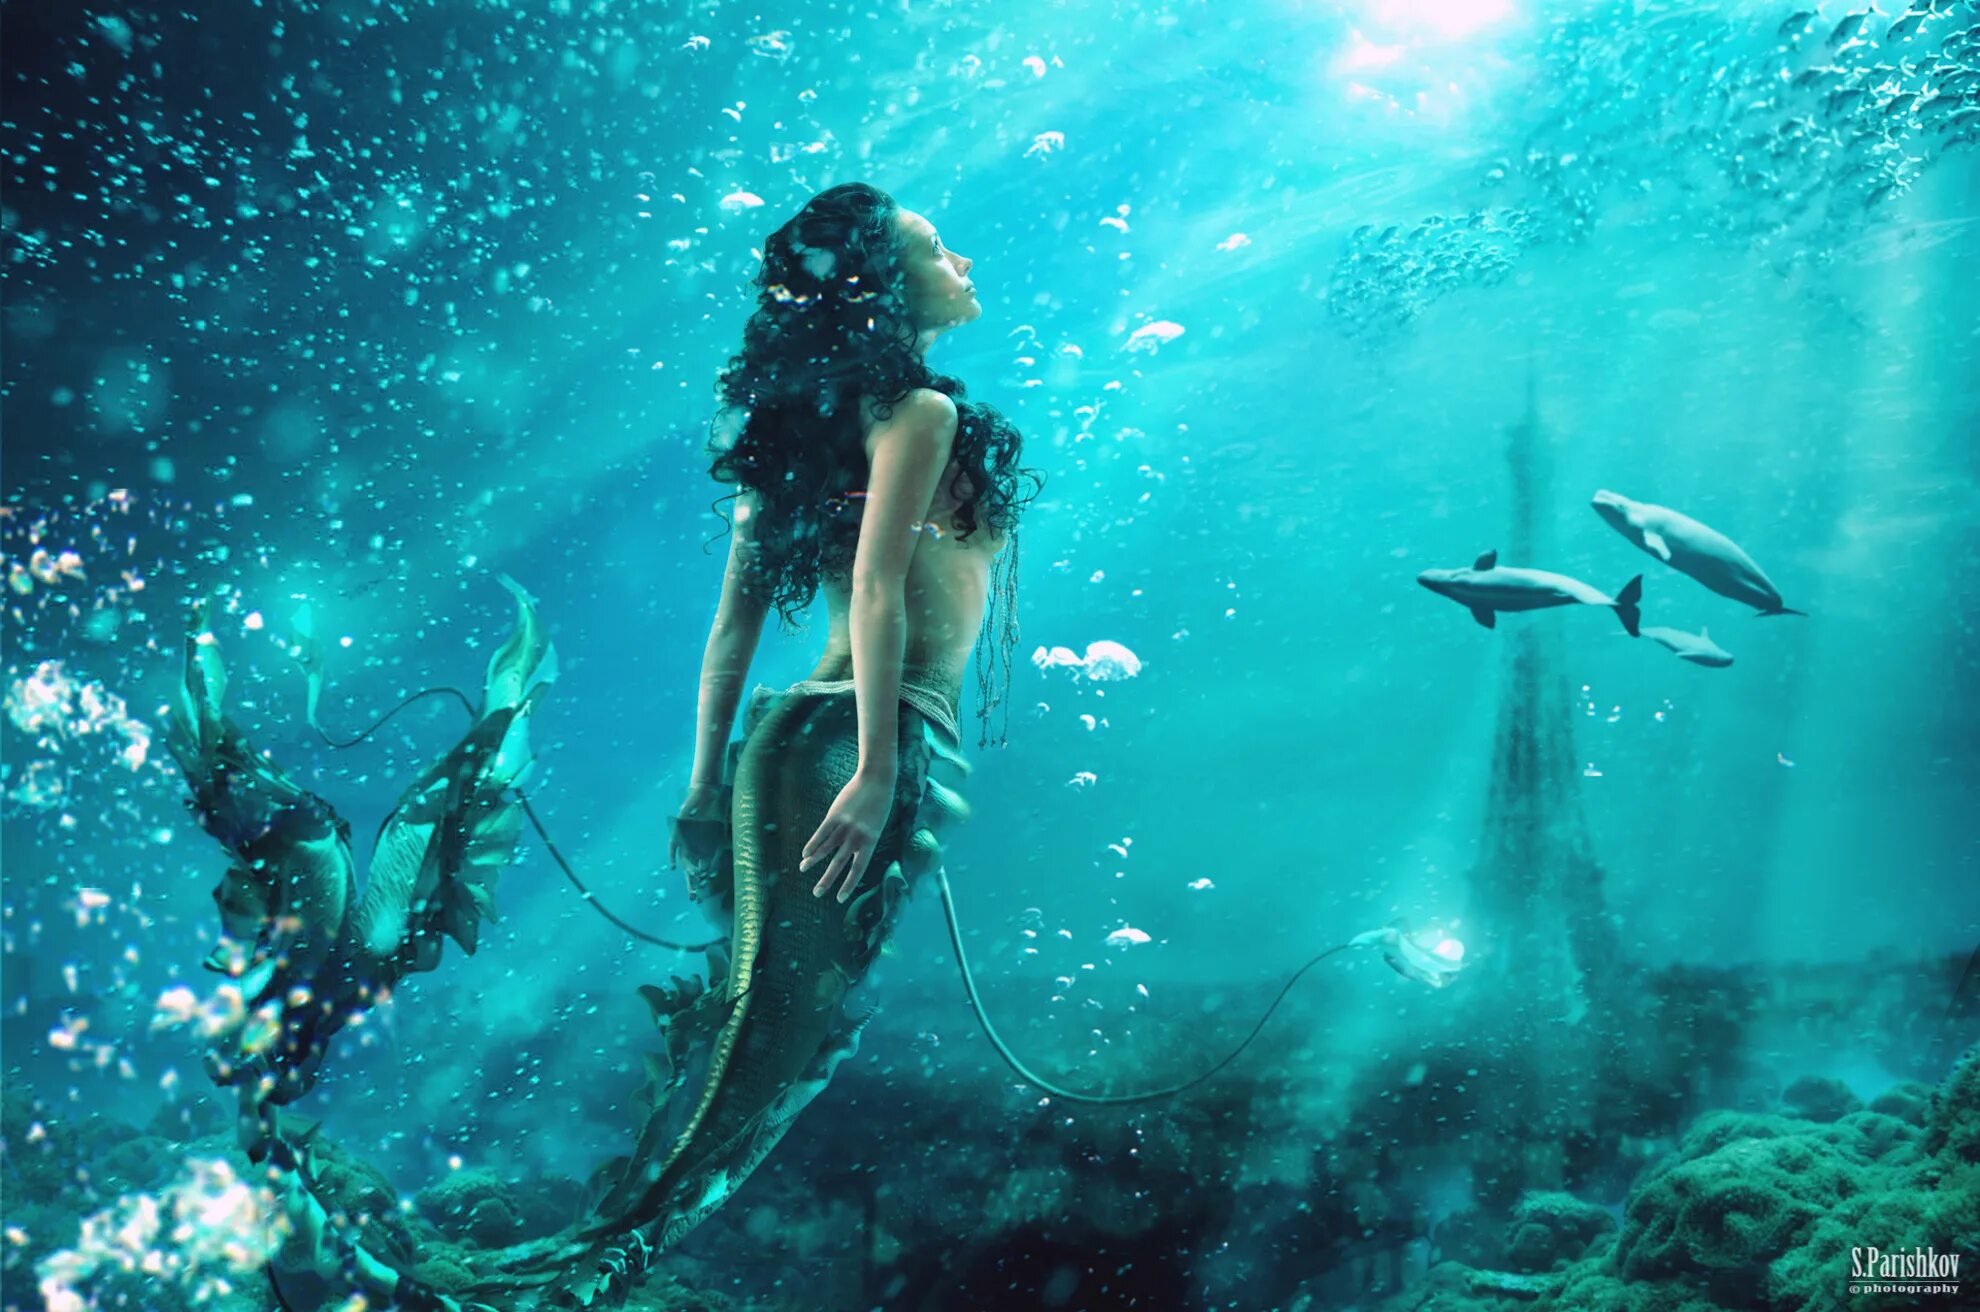 Фантастика про океан. Джулианна Мур Русалка. Девушка под водой. Фотосессия Русалка. Под водой фэнтези.